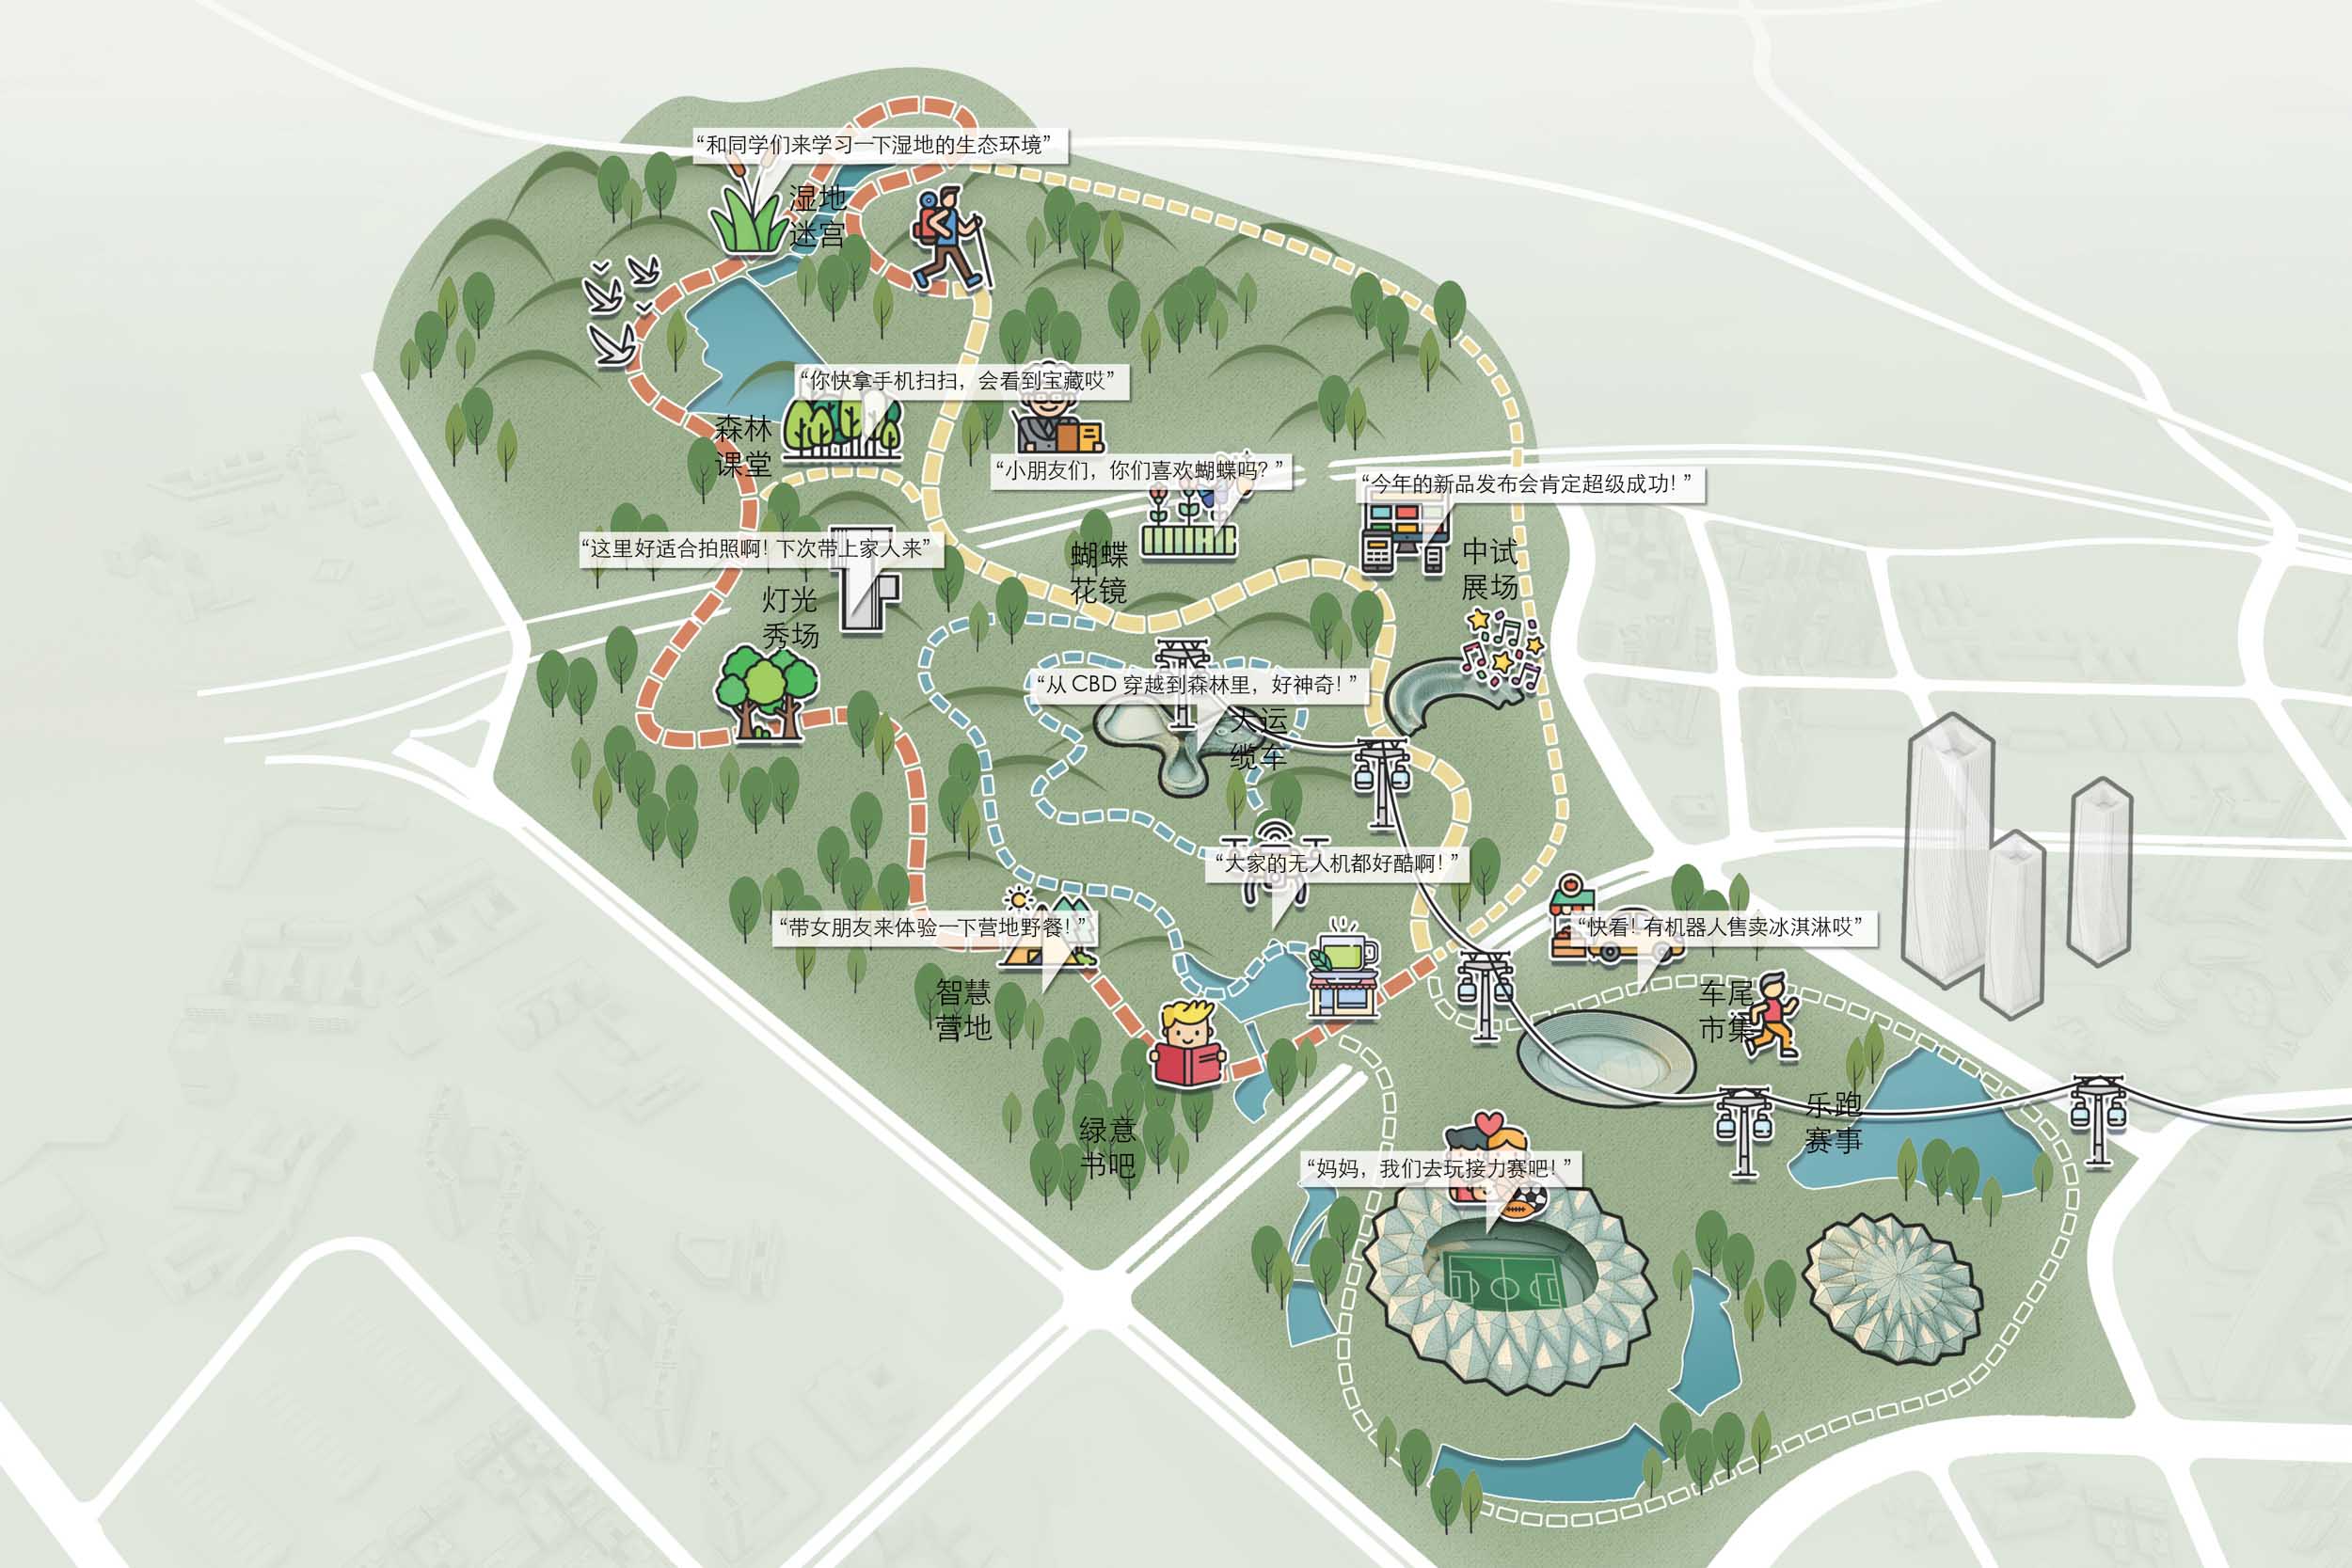 Shenzhen Universiade i-Park experience map